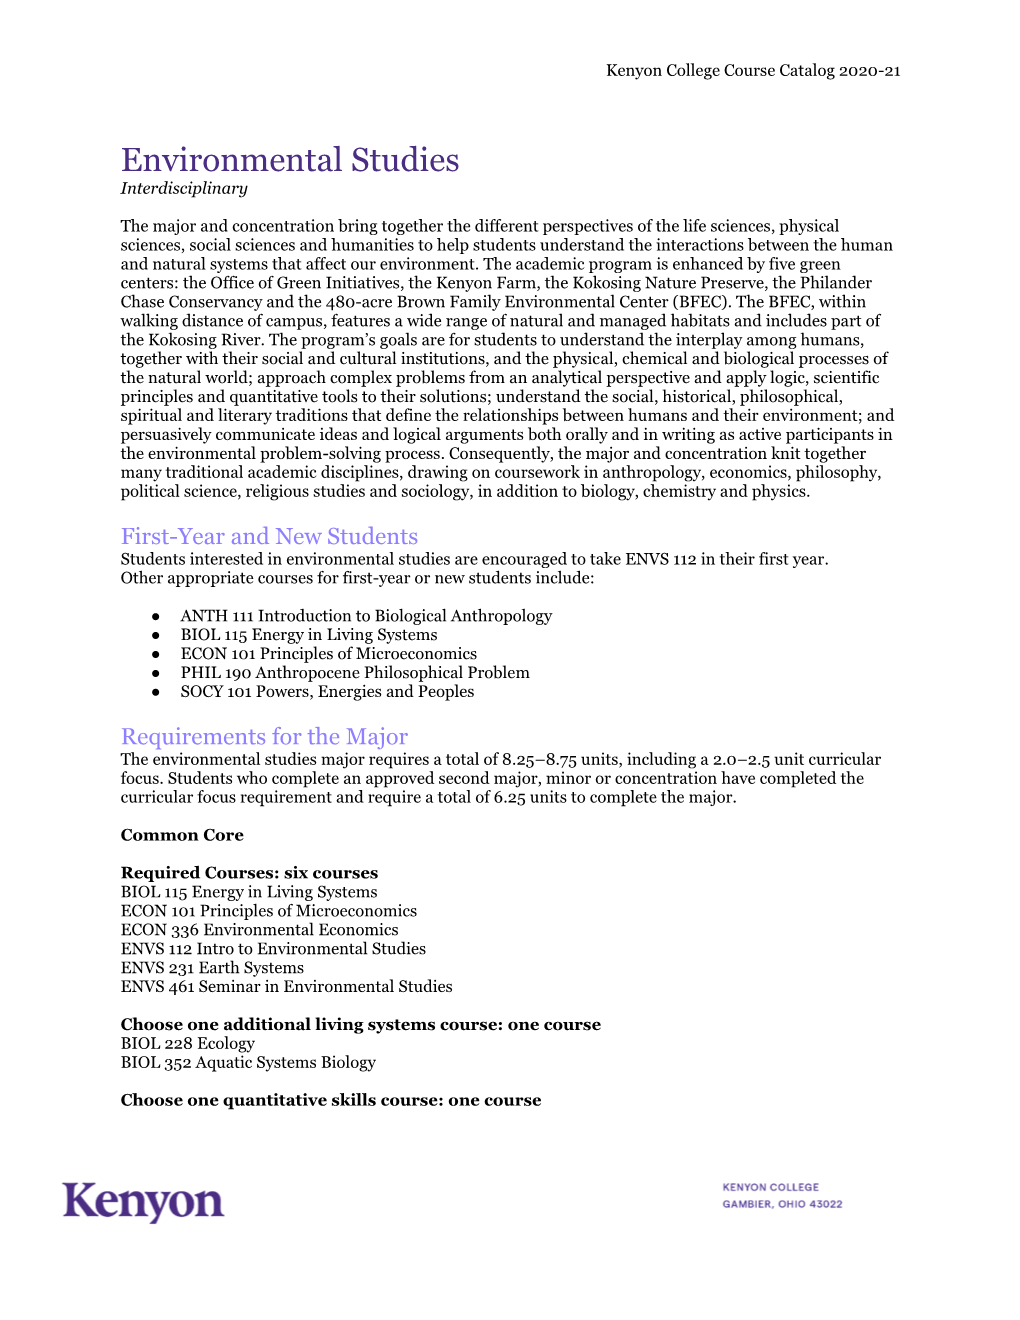 Environmental Studies Interdisciplinary